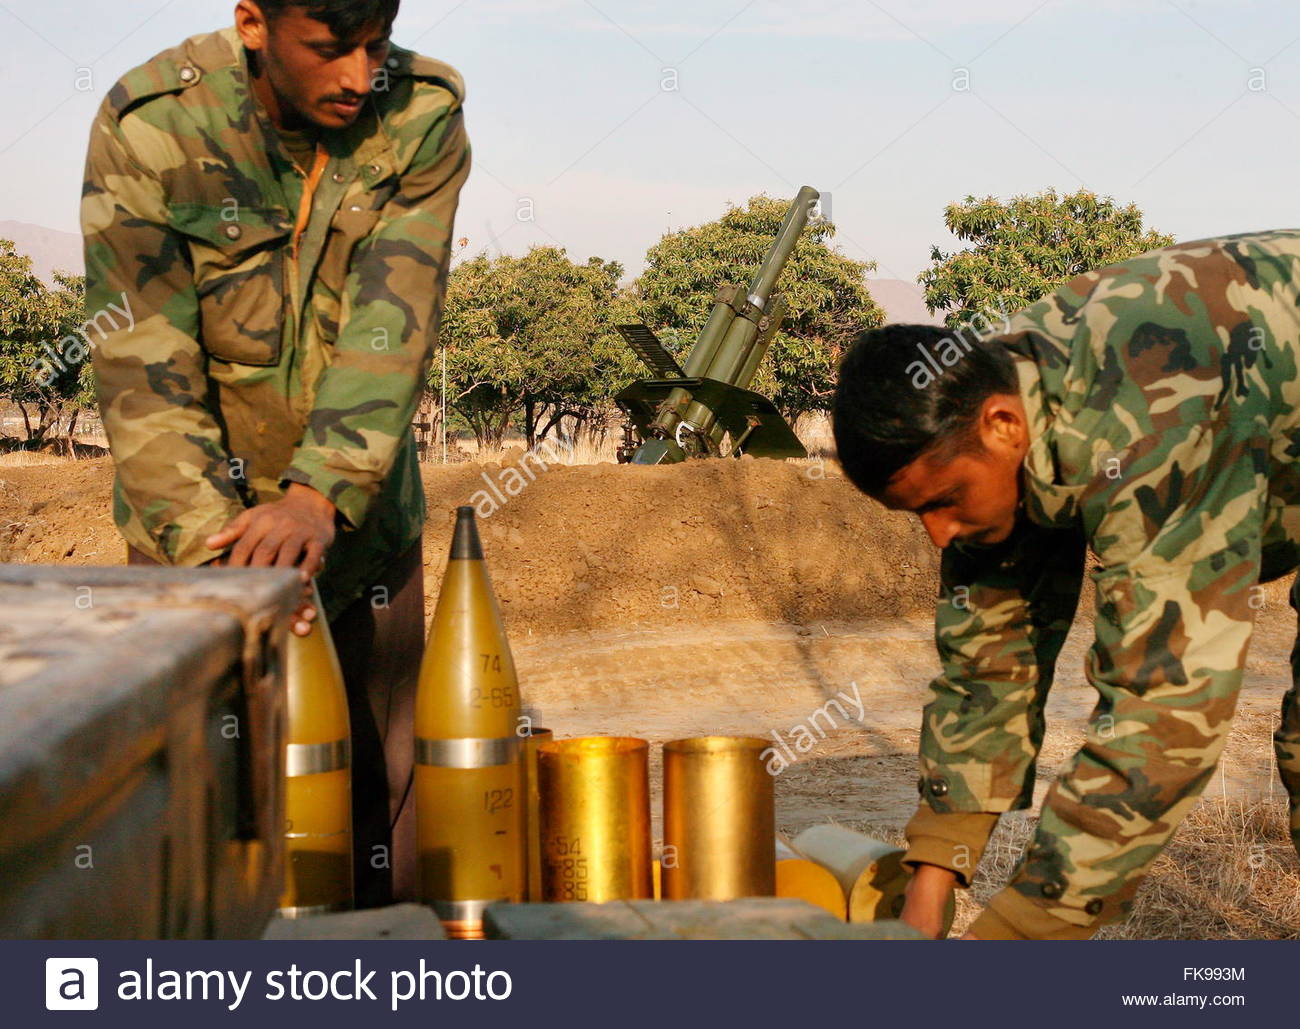 pakistan-army-soldiers-unpack-artillery-ammunition-in-swat-valley-fk993m-jpg.362562